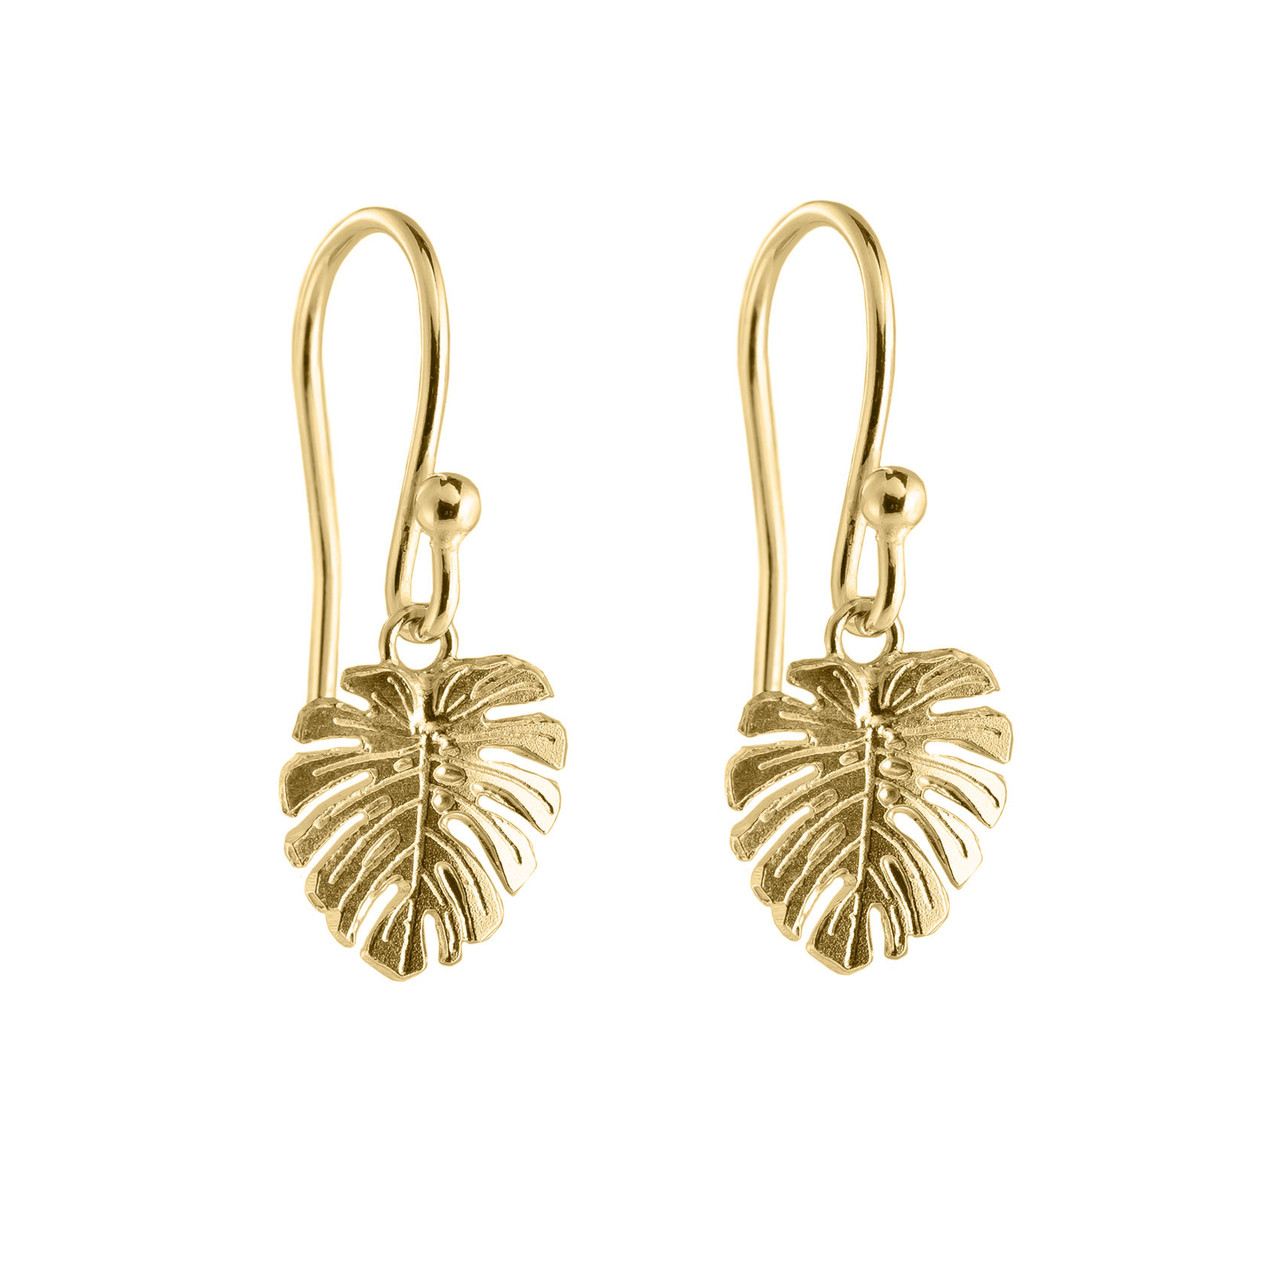 Monstera leaf hook earrings by UK jewellery designer Amanda Coleman. Available to shop online at tomfoolerylondon.co.uk